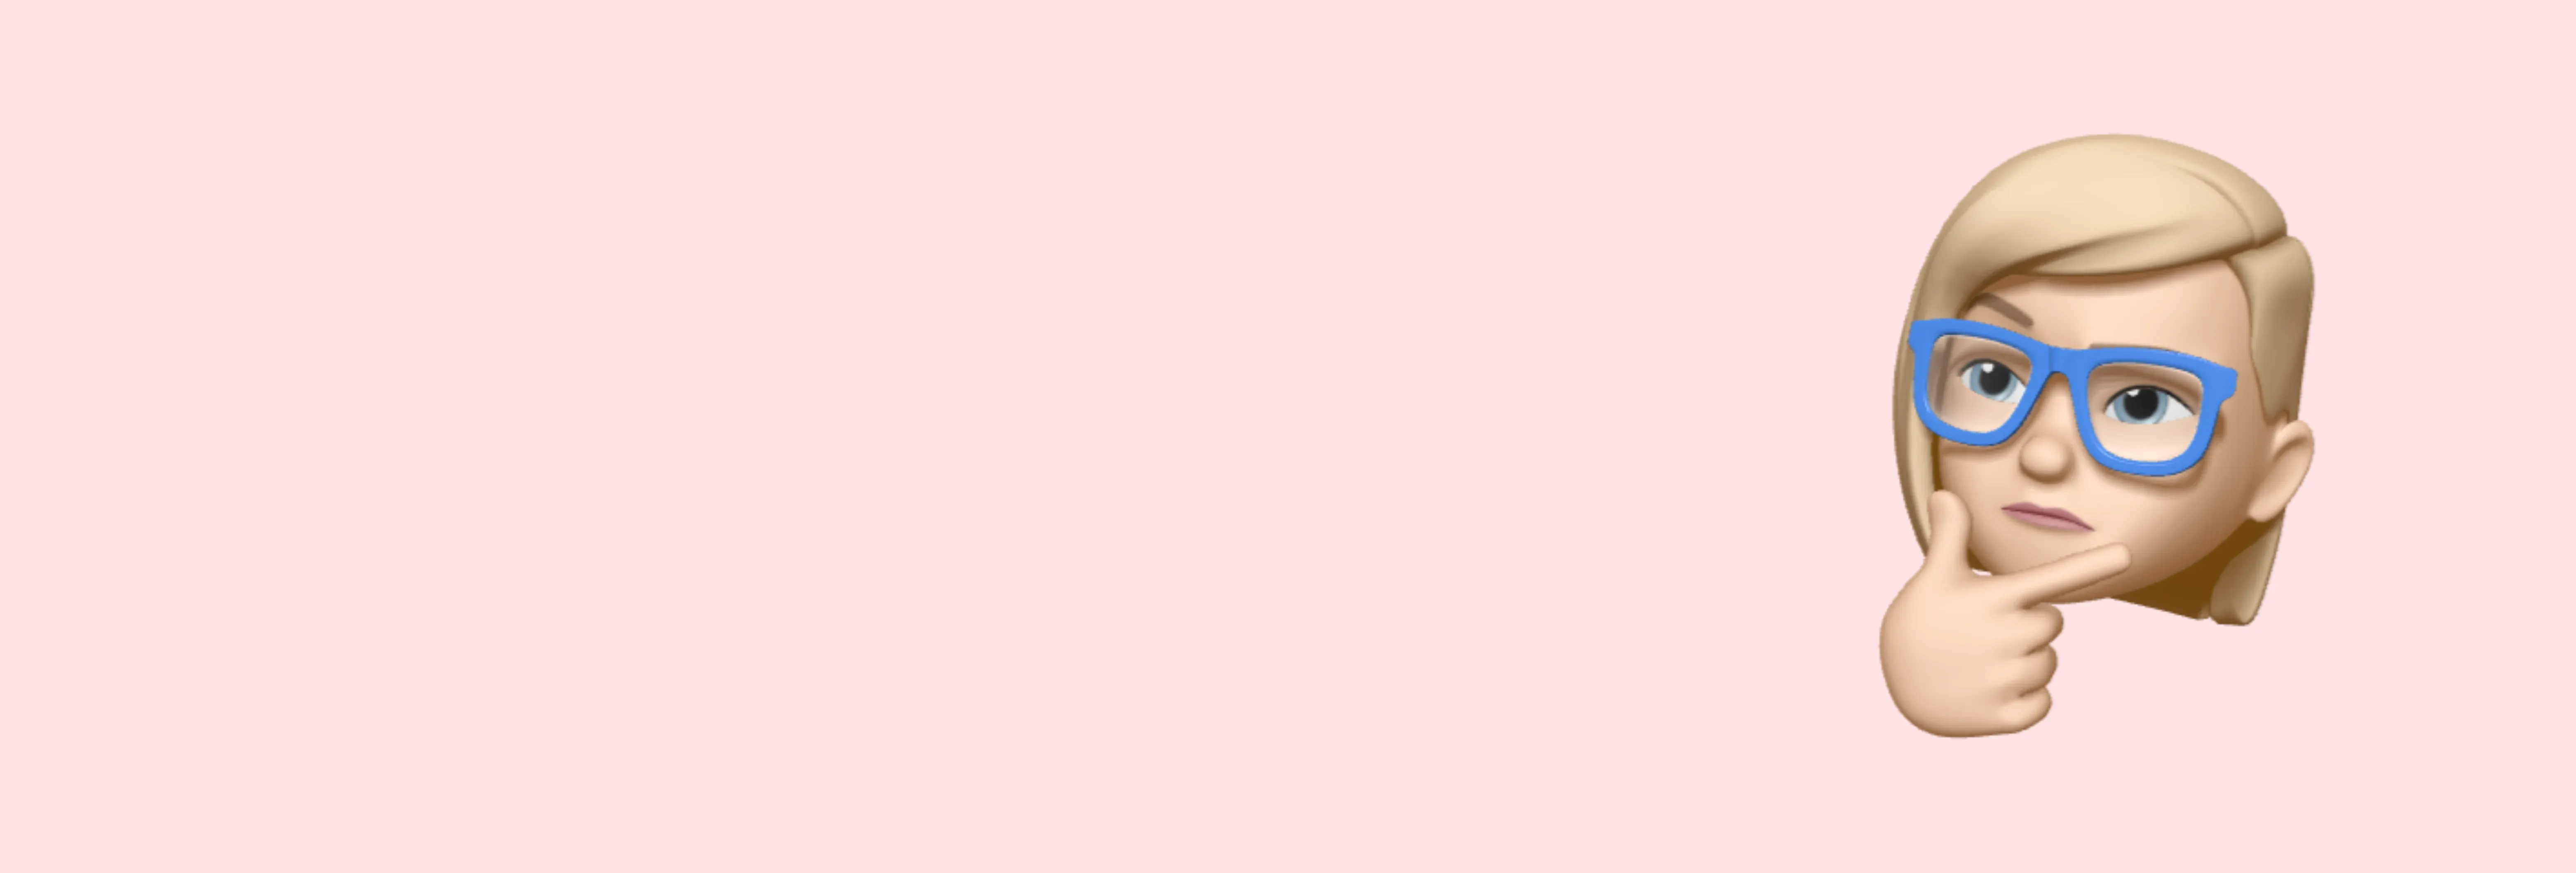 Memoji thinking on a pink background